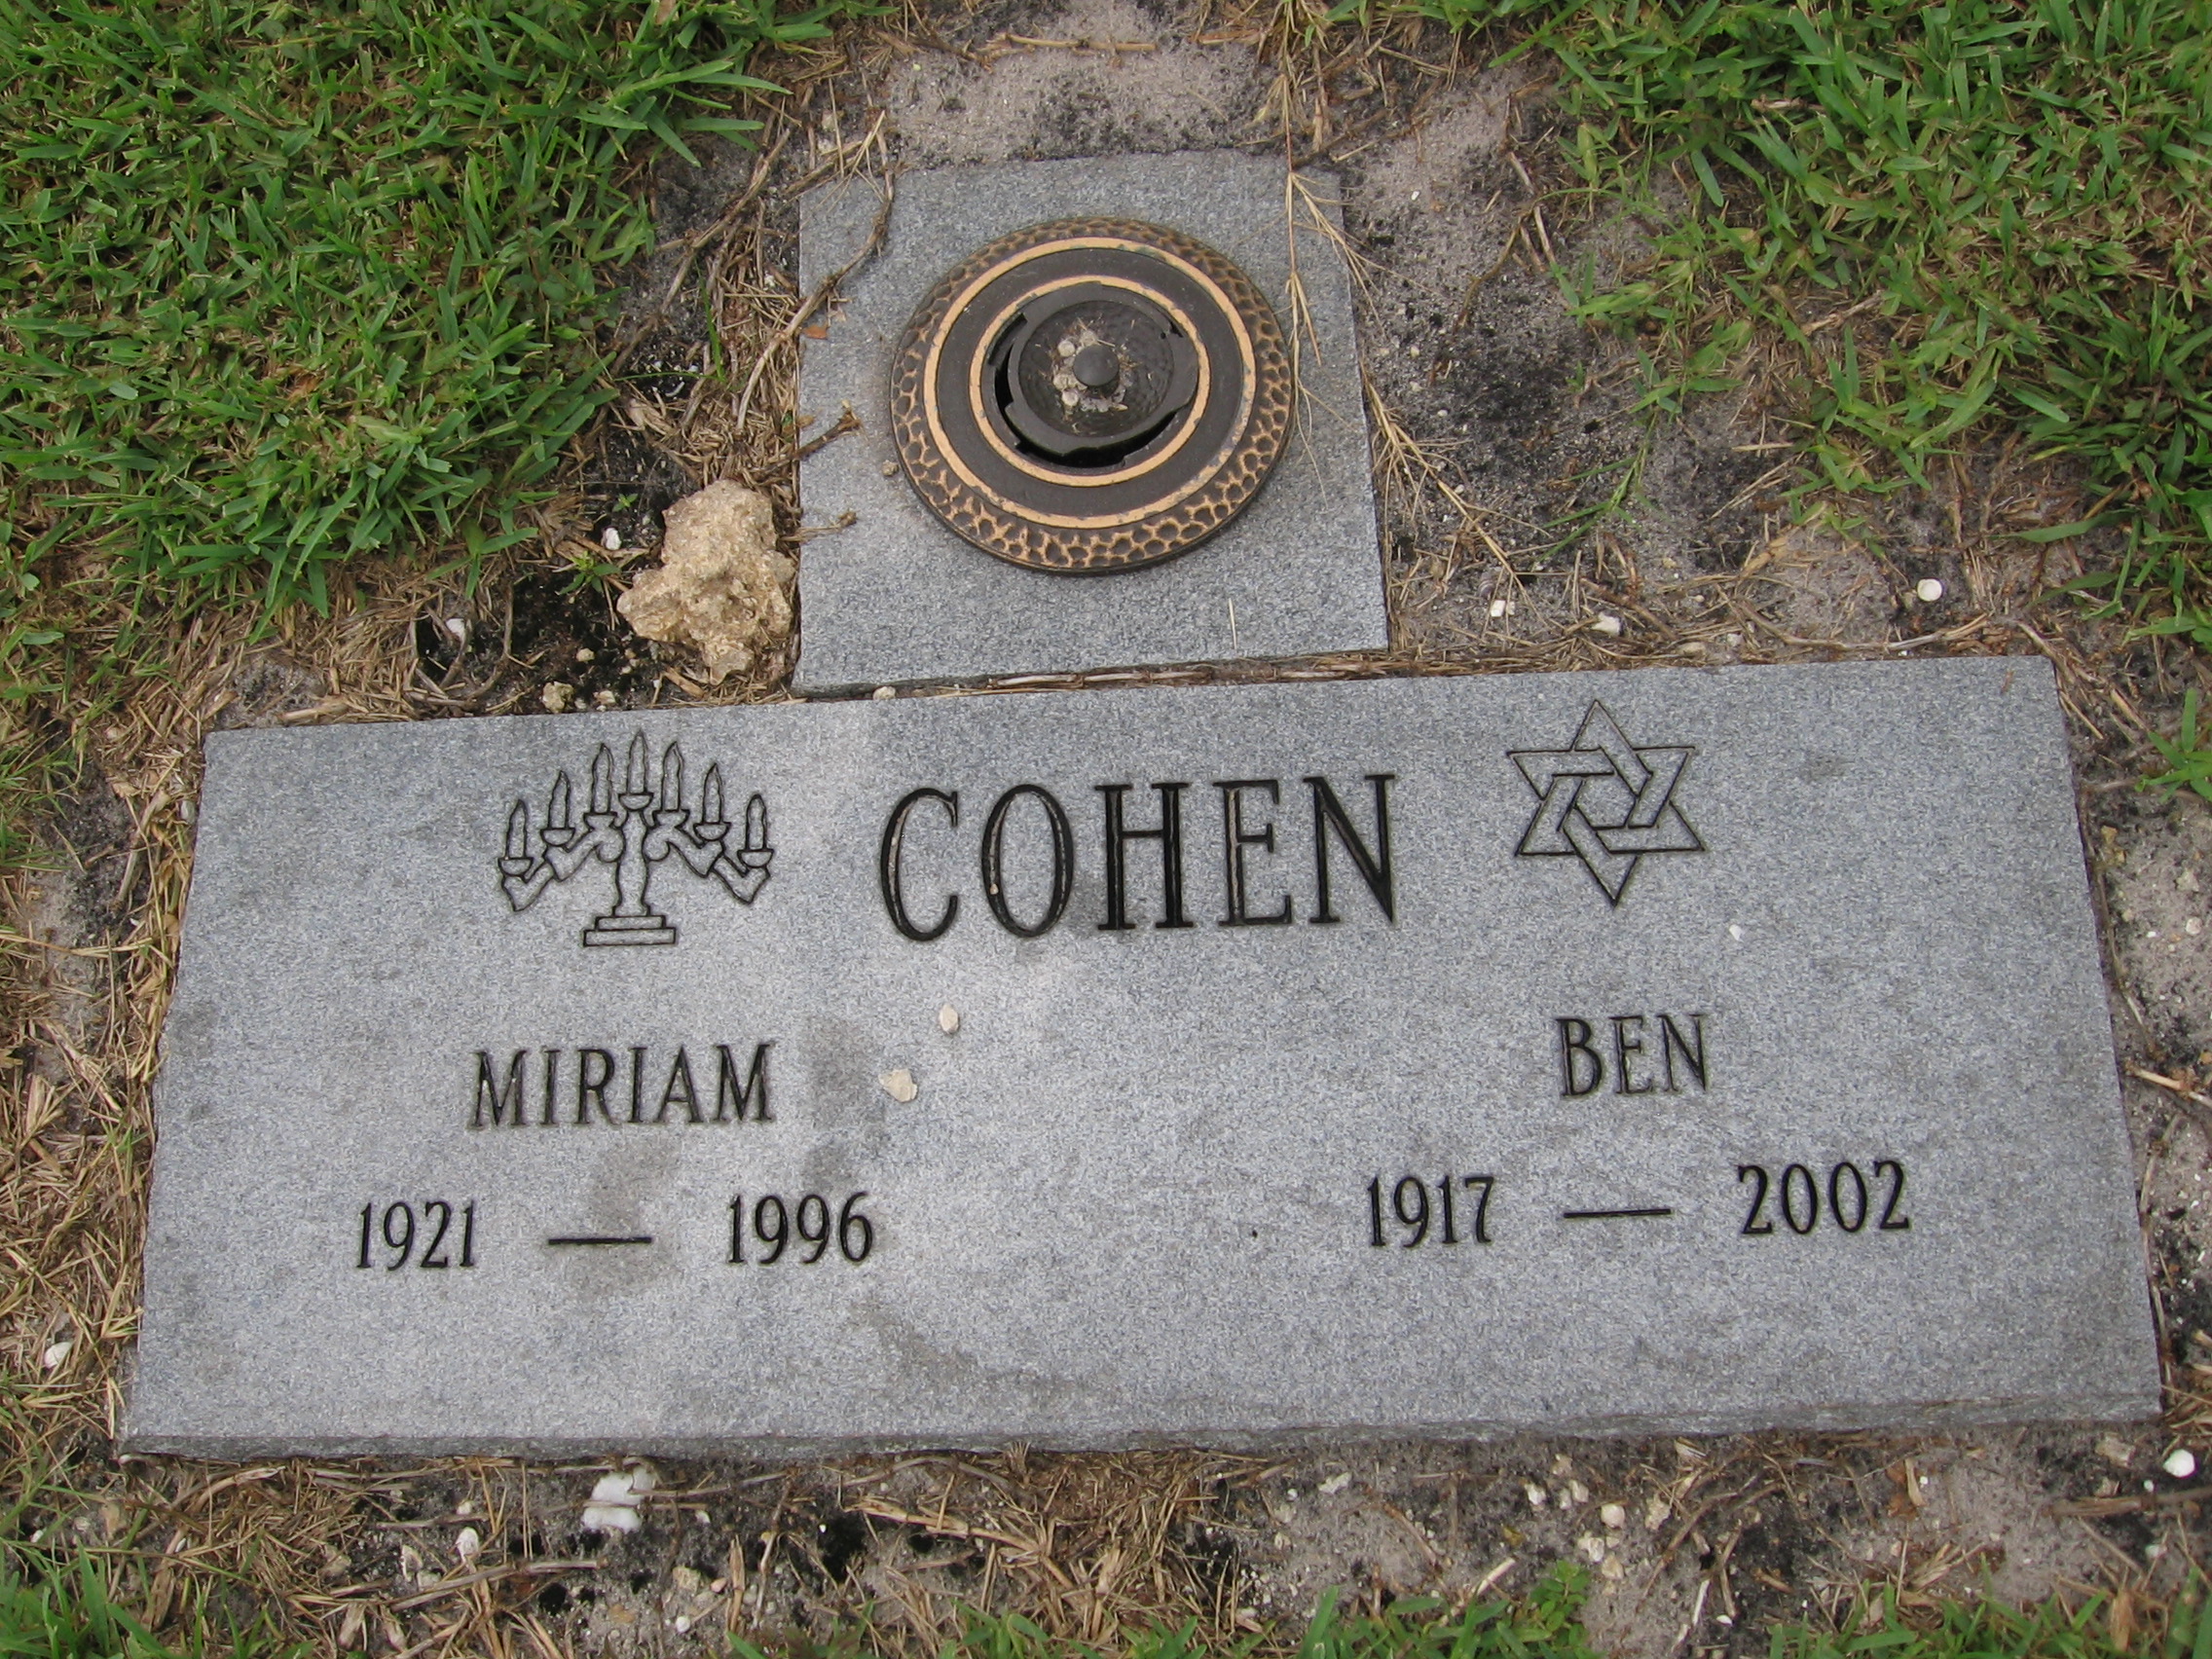 Ben Cohen